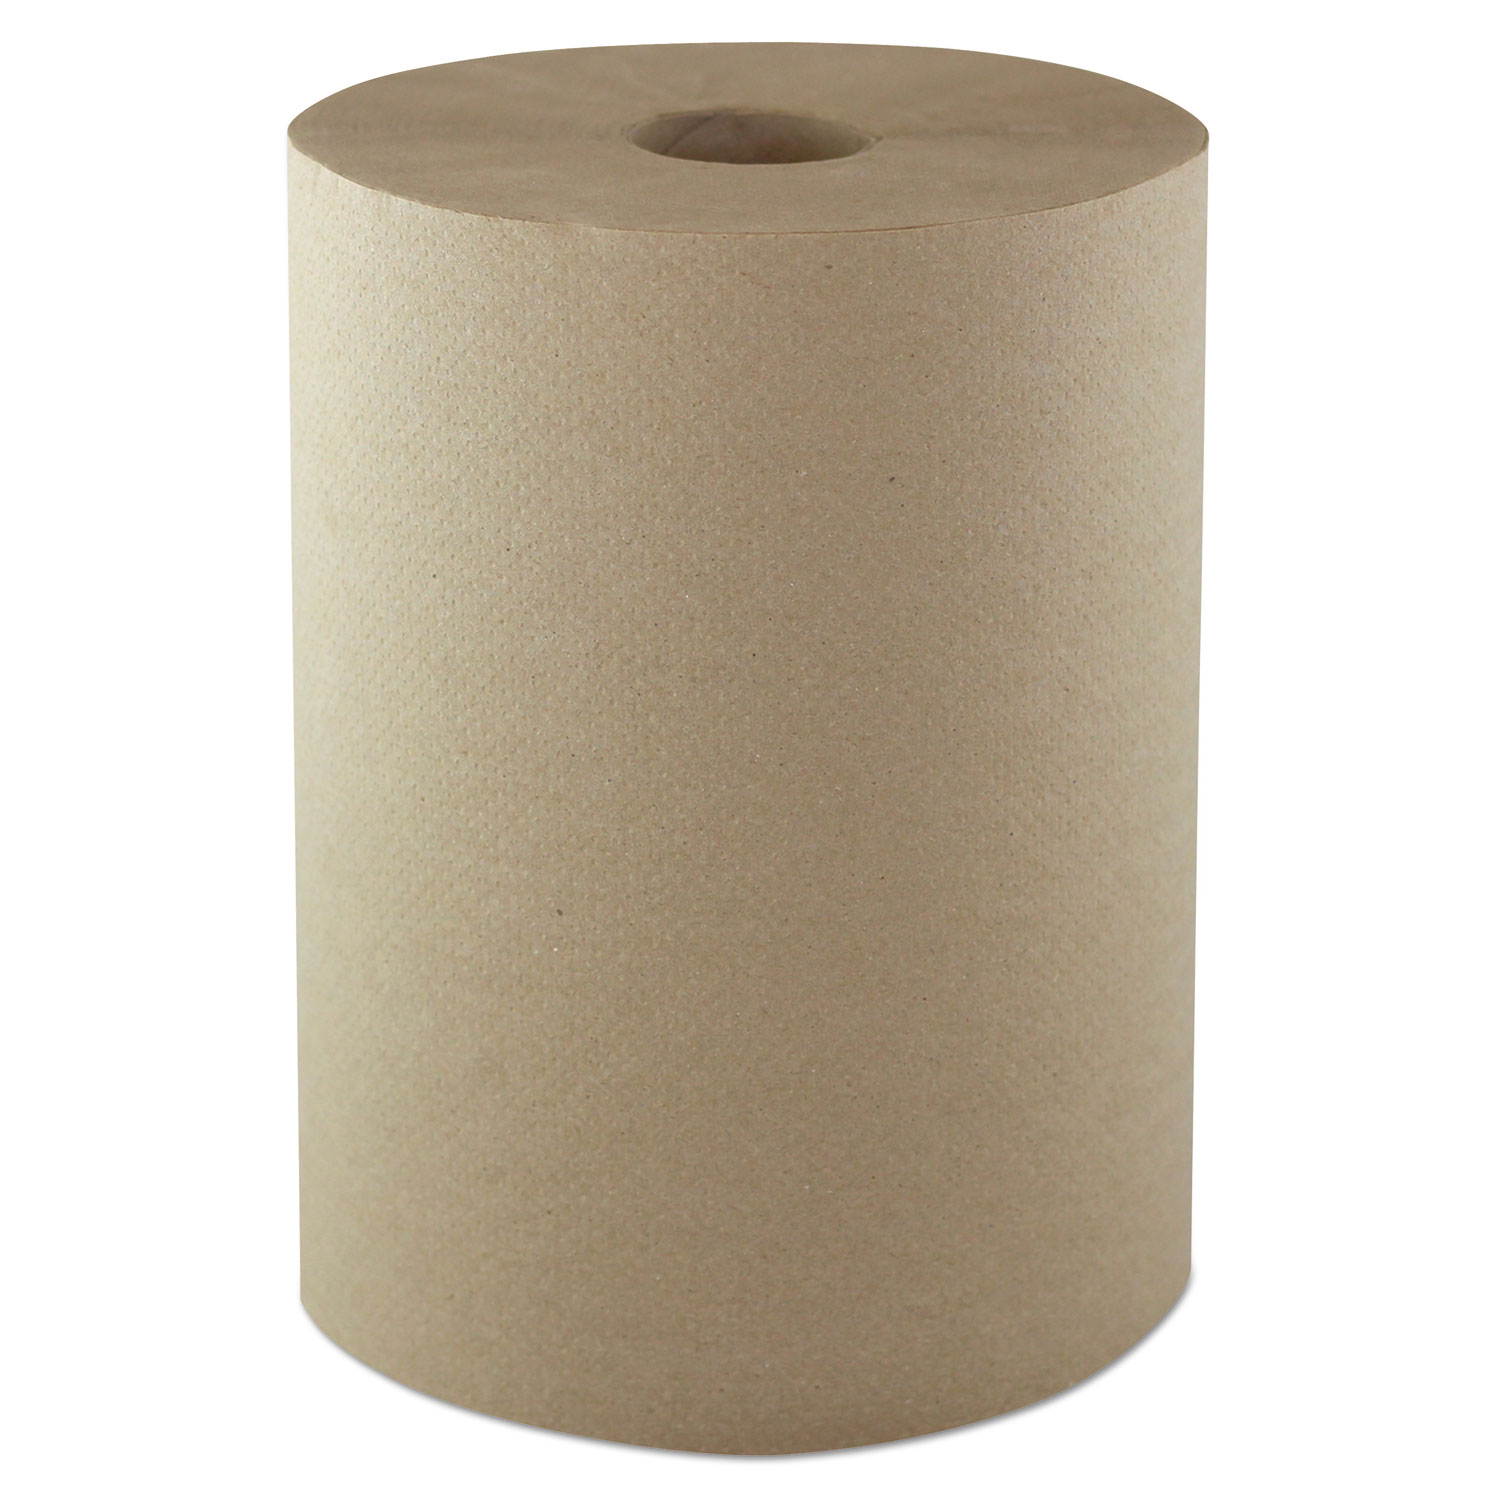  Morcon Tissue R106 10 Inch Roll Towels, 1-Ply, 10 x 800 ft, Kraft, 6 Rolls/Carton (MORR106) 